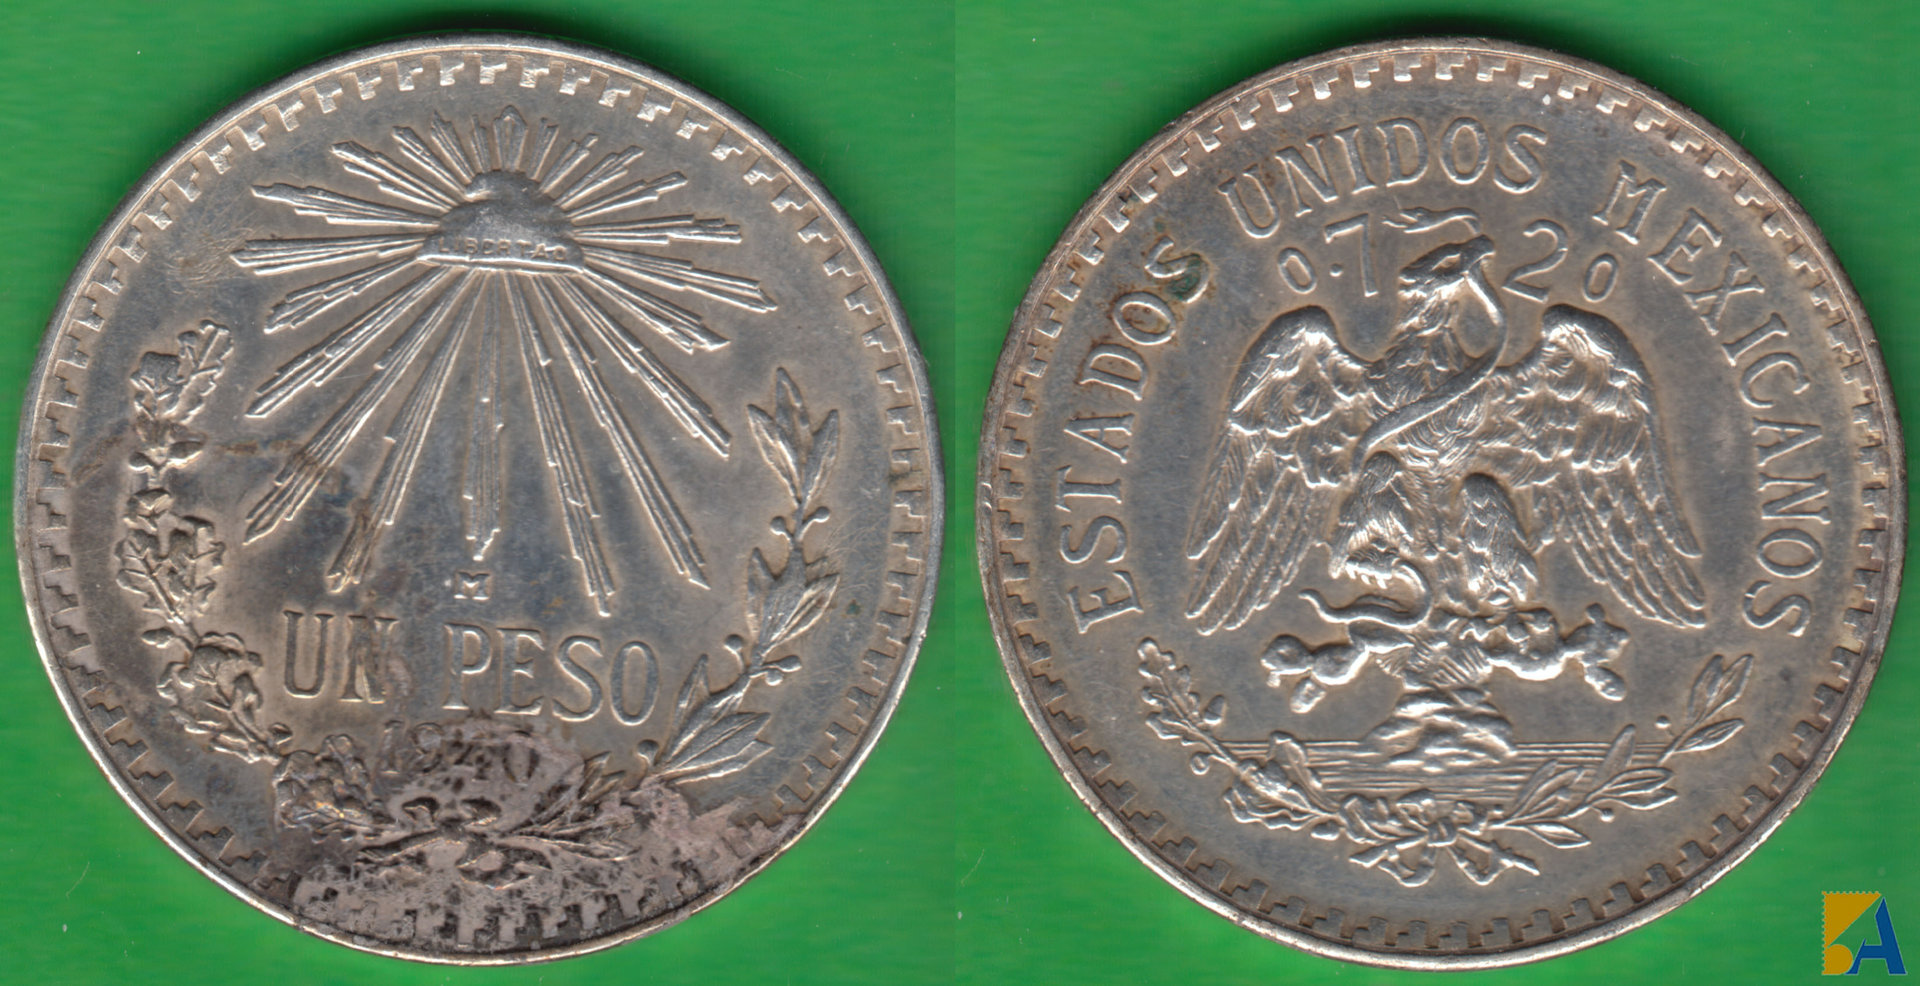 MEJICO - MEXICO. 1 PESO DE 1940 M. PLATA 0.724. (3)